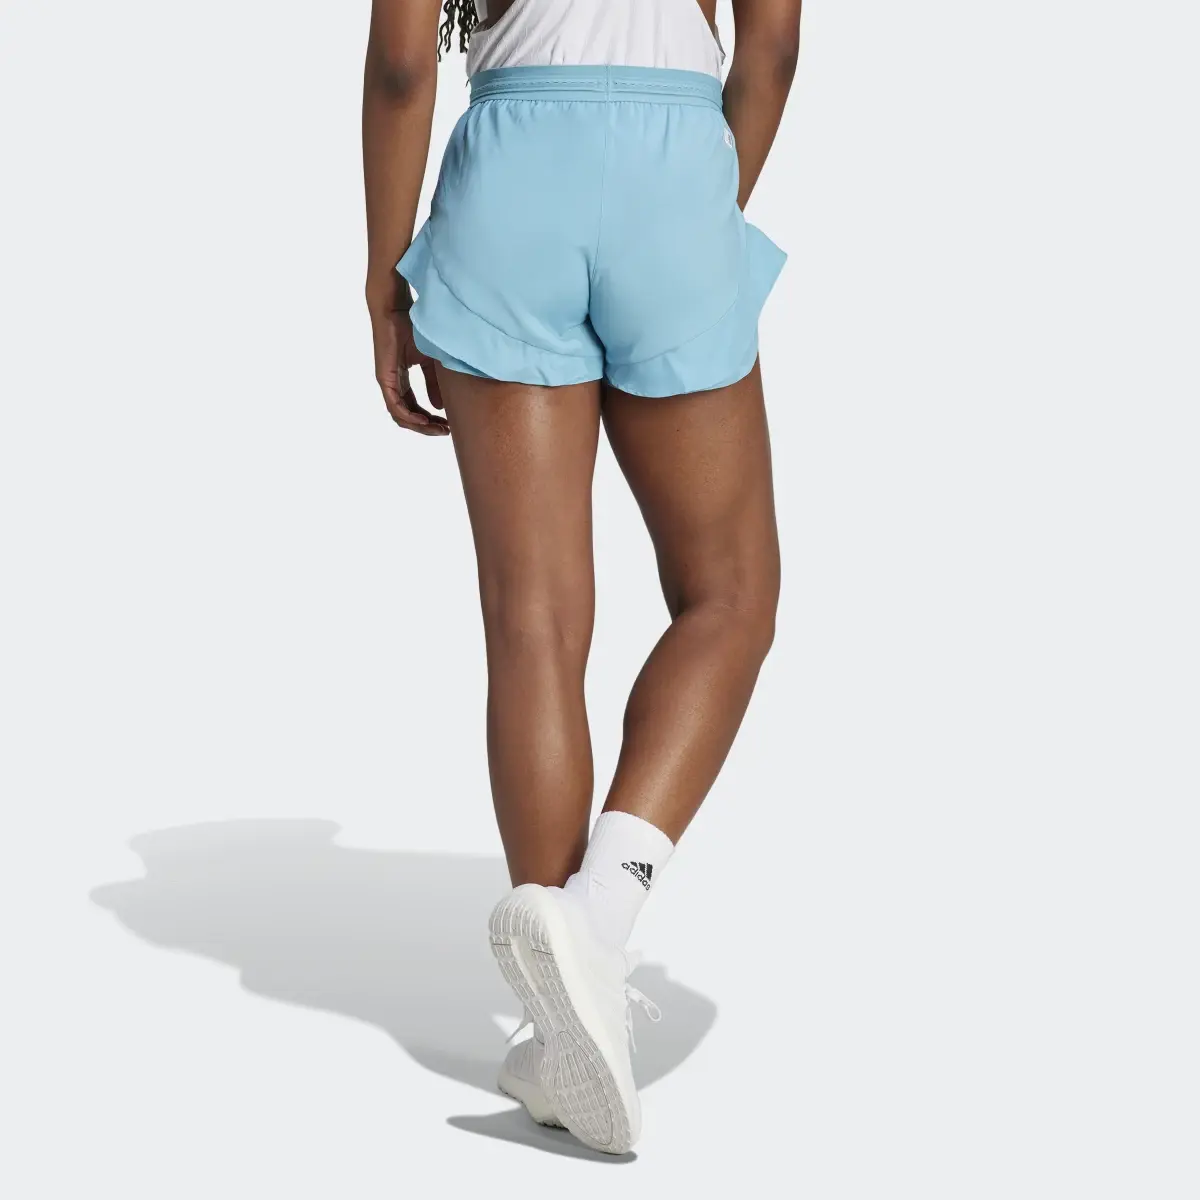 Adidas Made to be Remade Running Shorts. 2